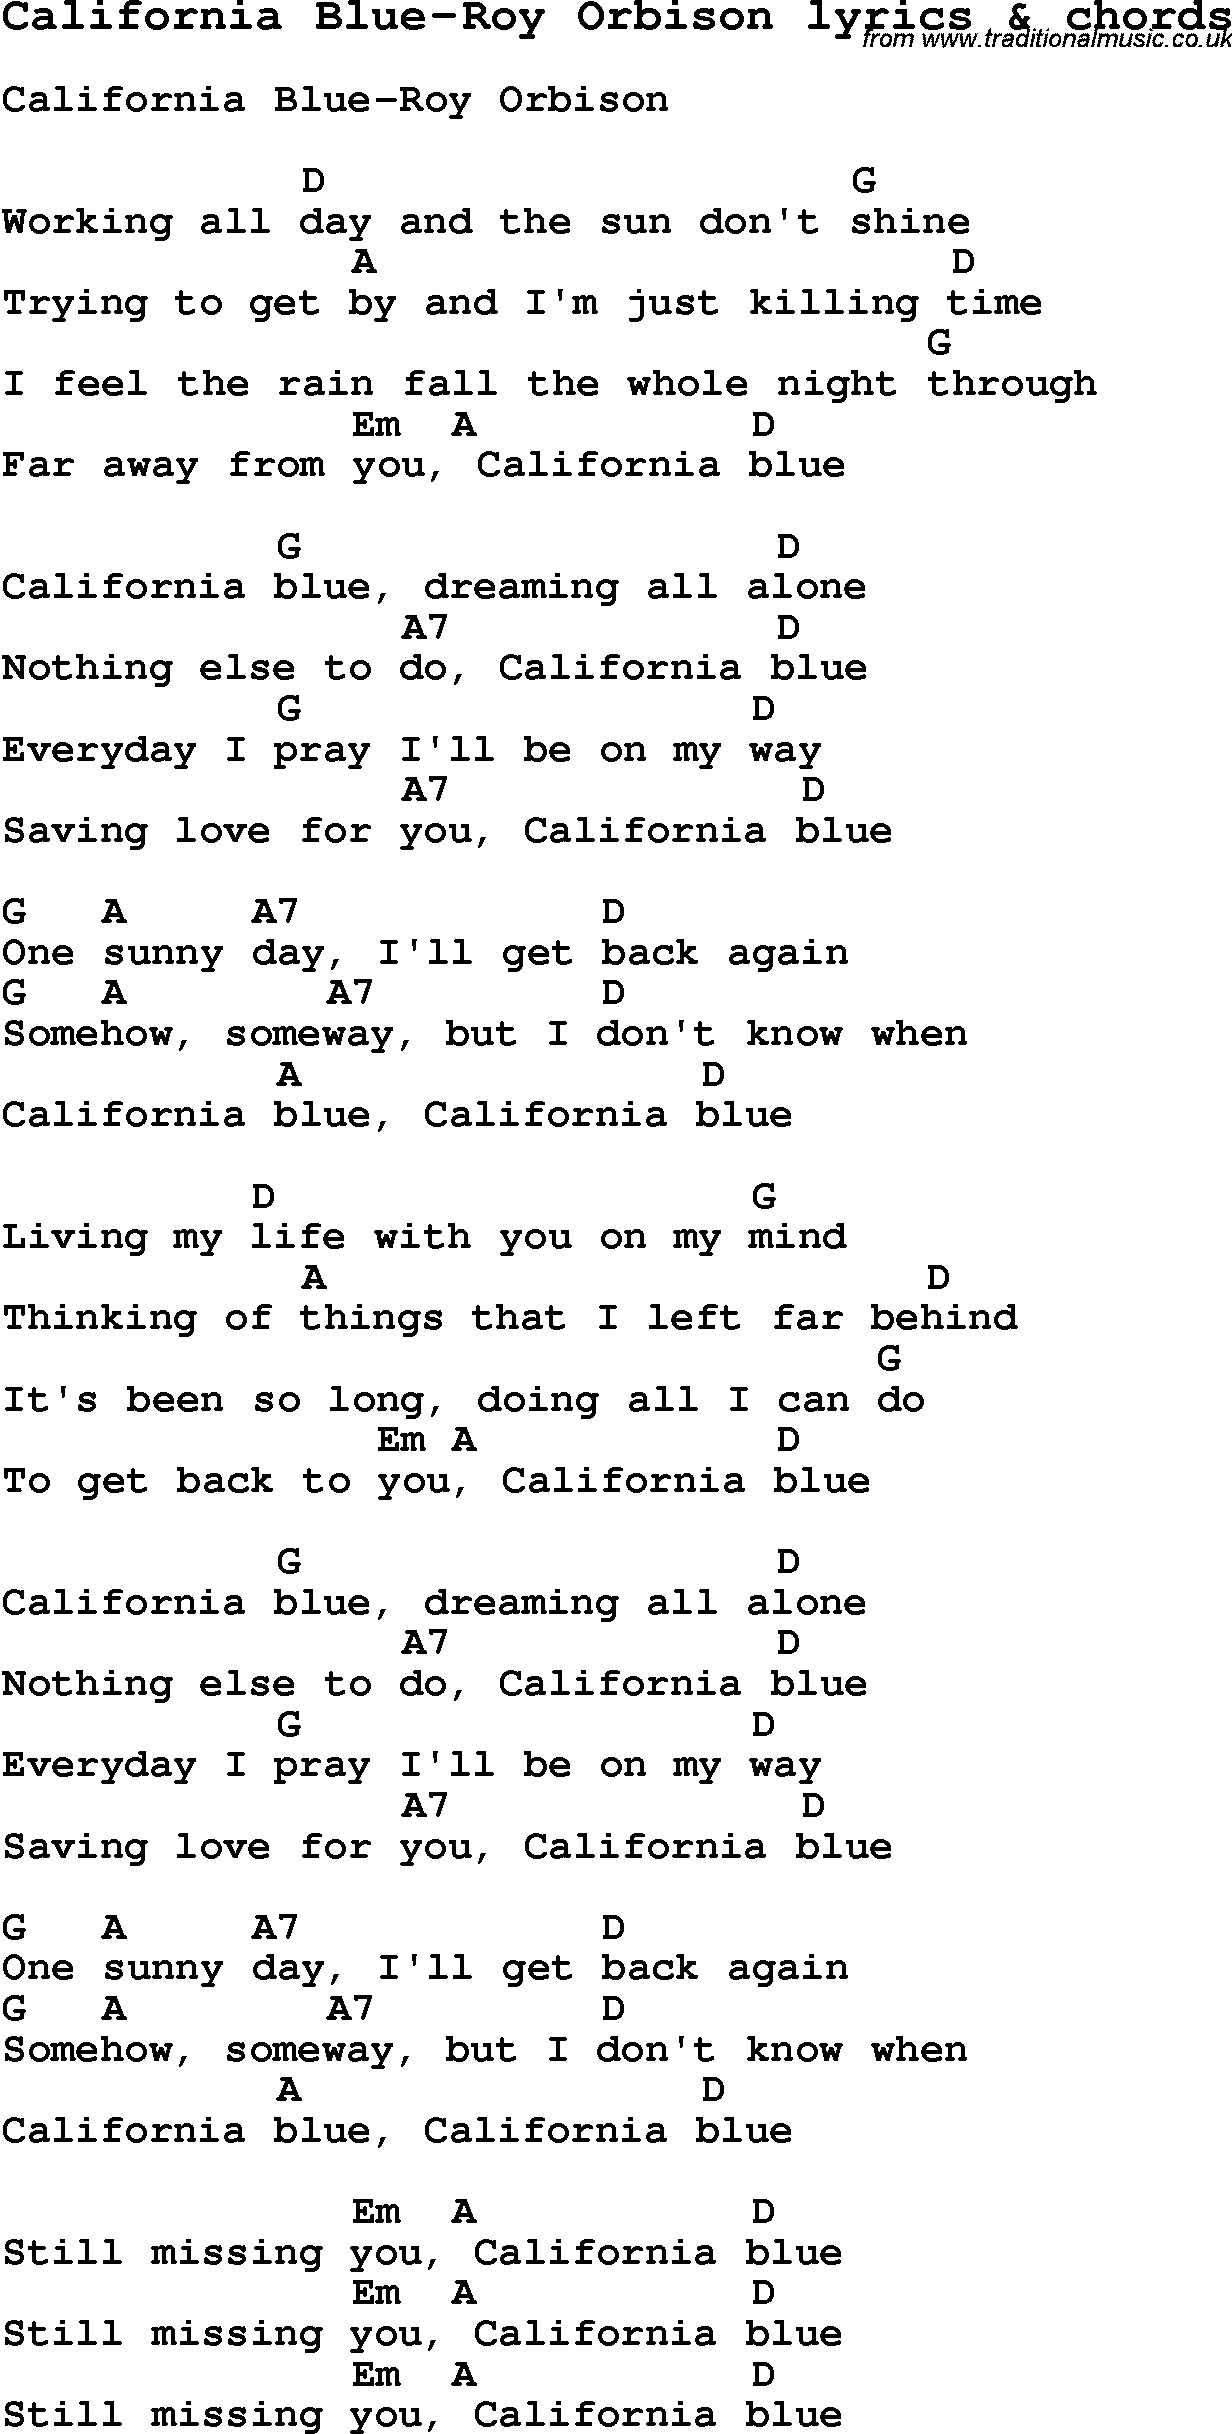 Love Song Lyrics for: California Blue-Roy Orbison with chords for Ukulele, Guitar Banjo etc.